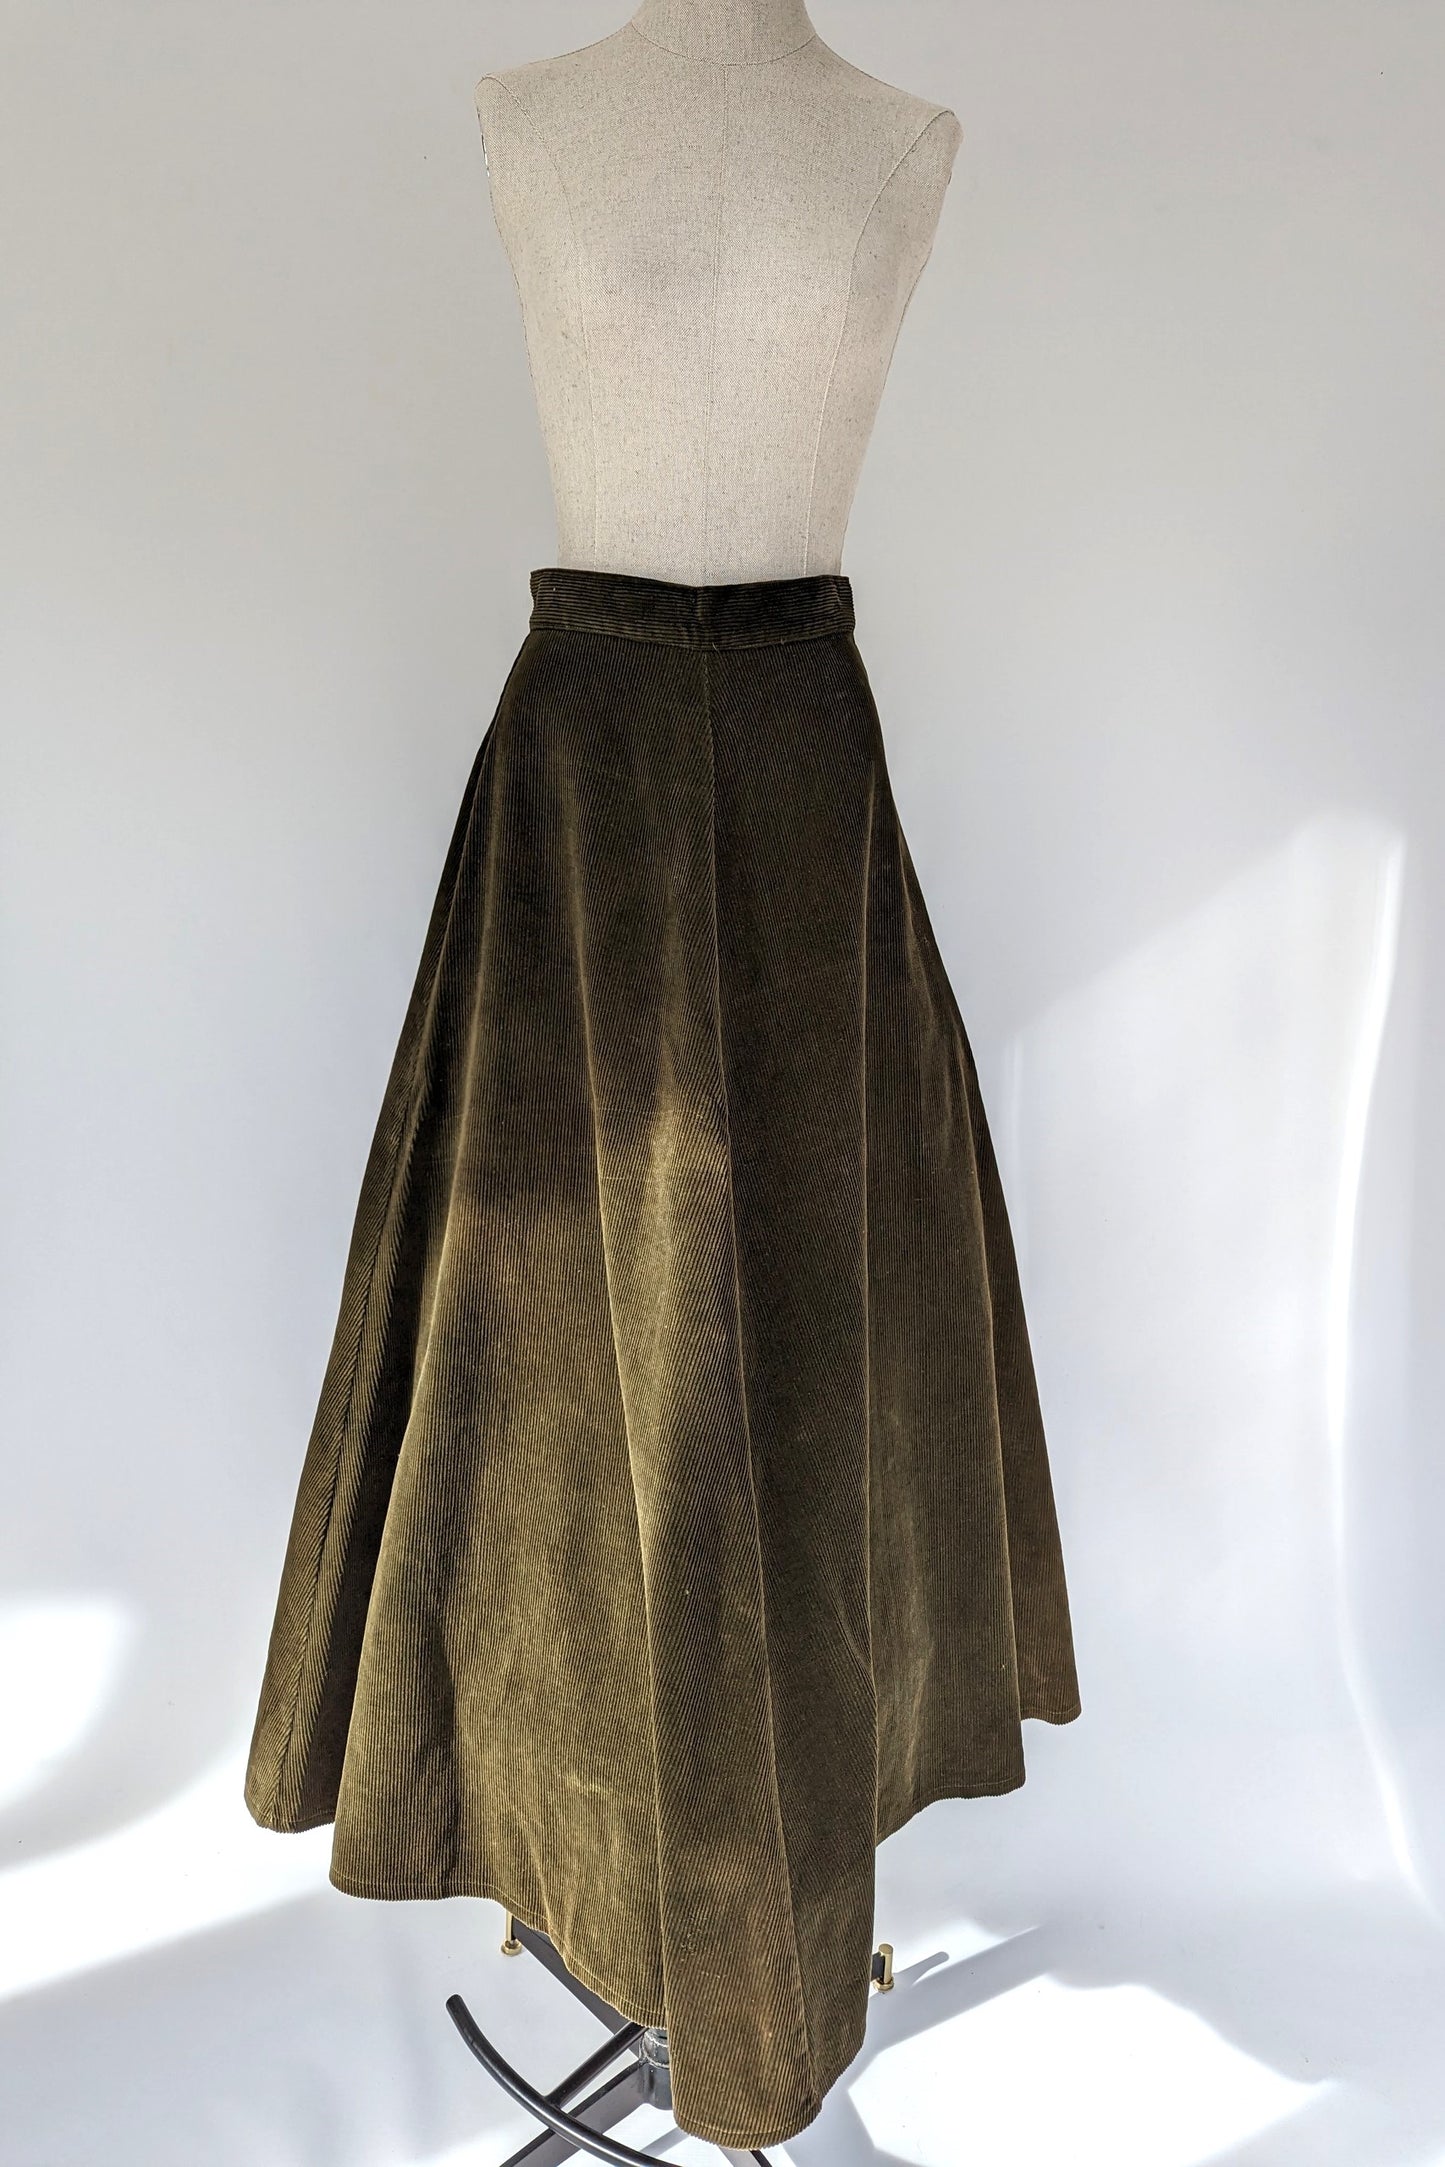 Laura Ashley vintage skirt